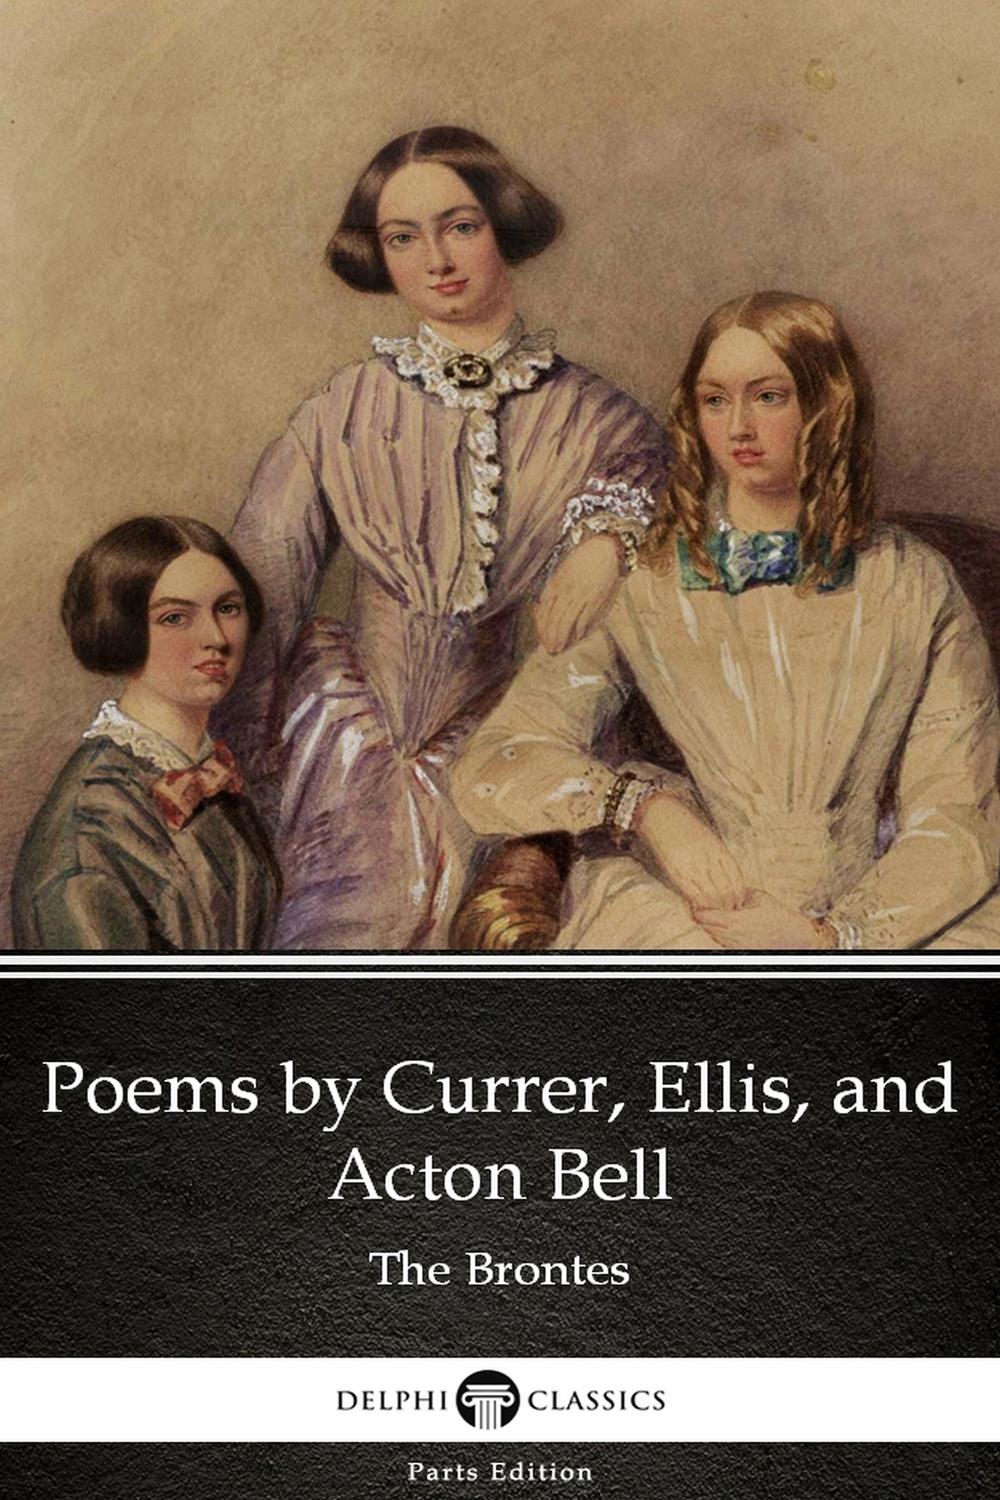 Poems by Currer, Ellis, and Acton Bell by The Bronte Sisters (Illustrated) - Anne Brontë, Charlotte Brontë, Emily Brontë